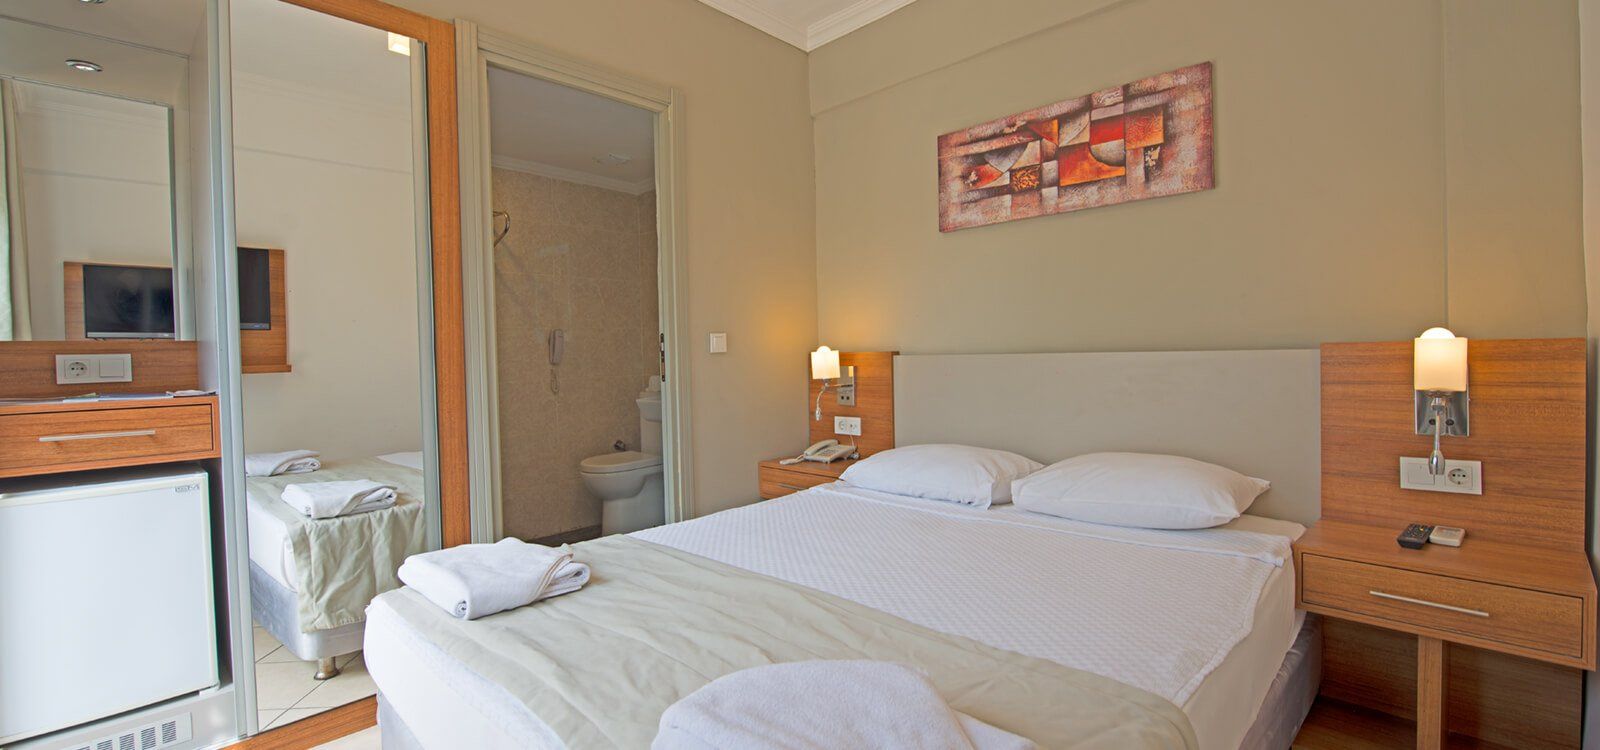 Anadolu Hotel Bodrum Standard Double Room